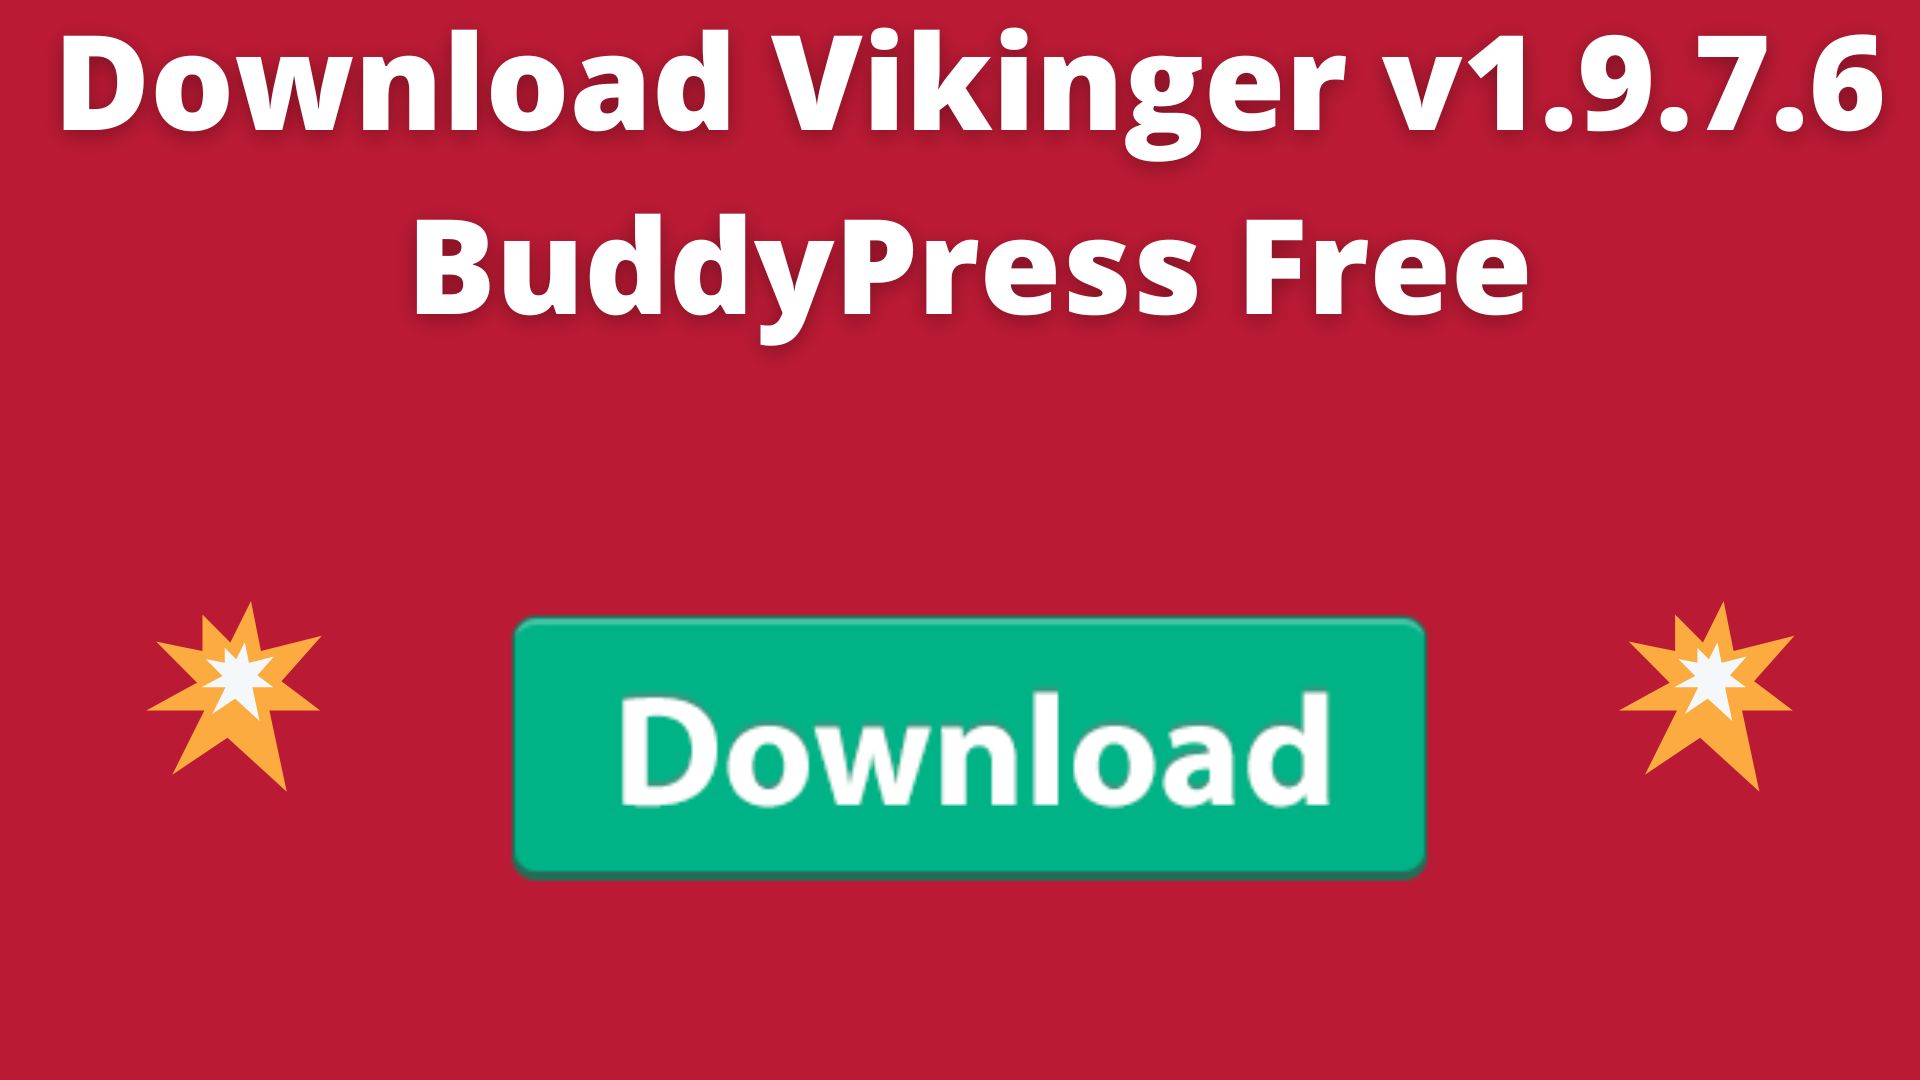 Download vikinger v1. 9. 7. 6 buddypress free